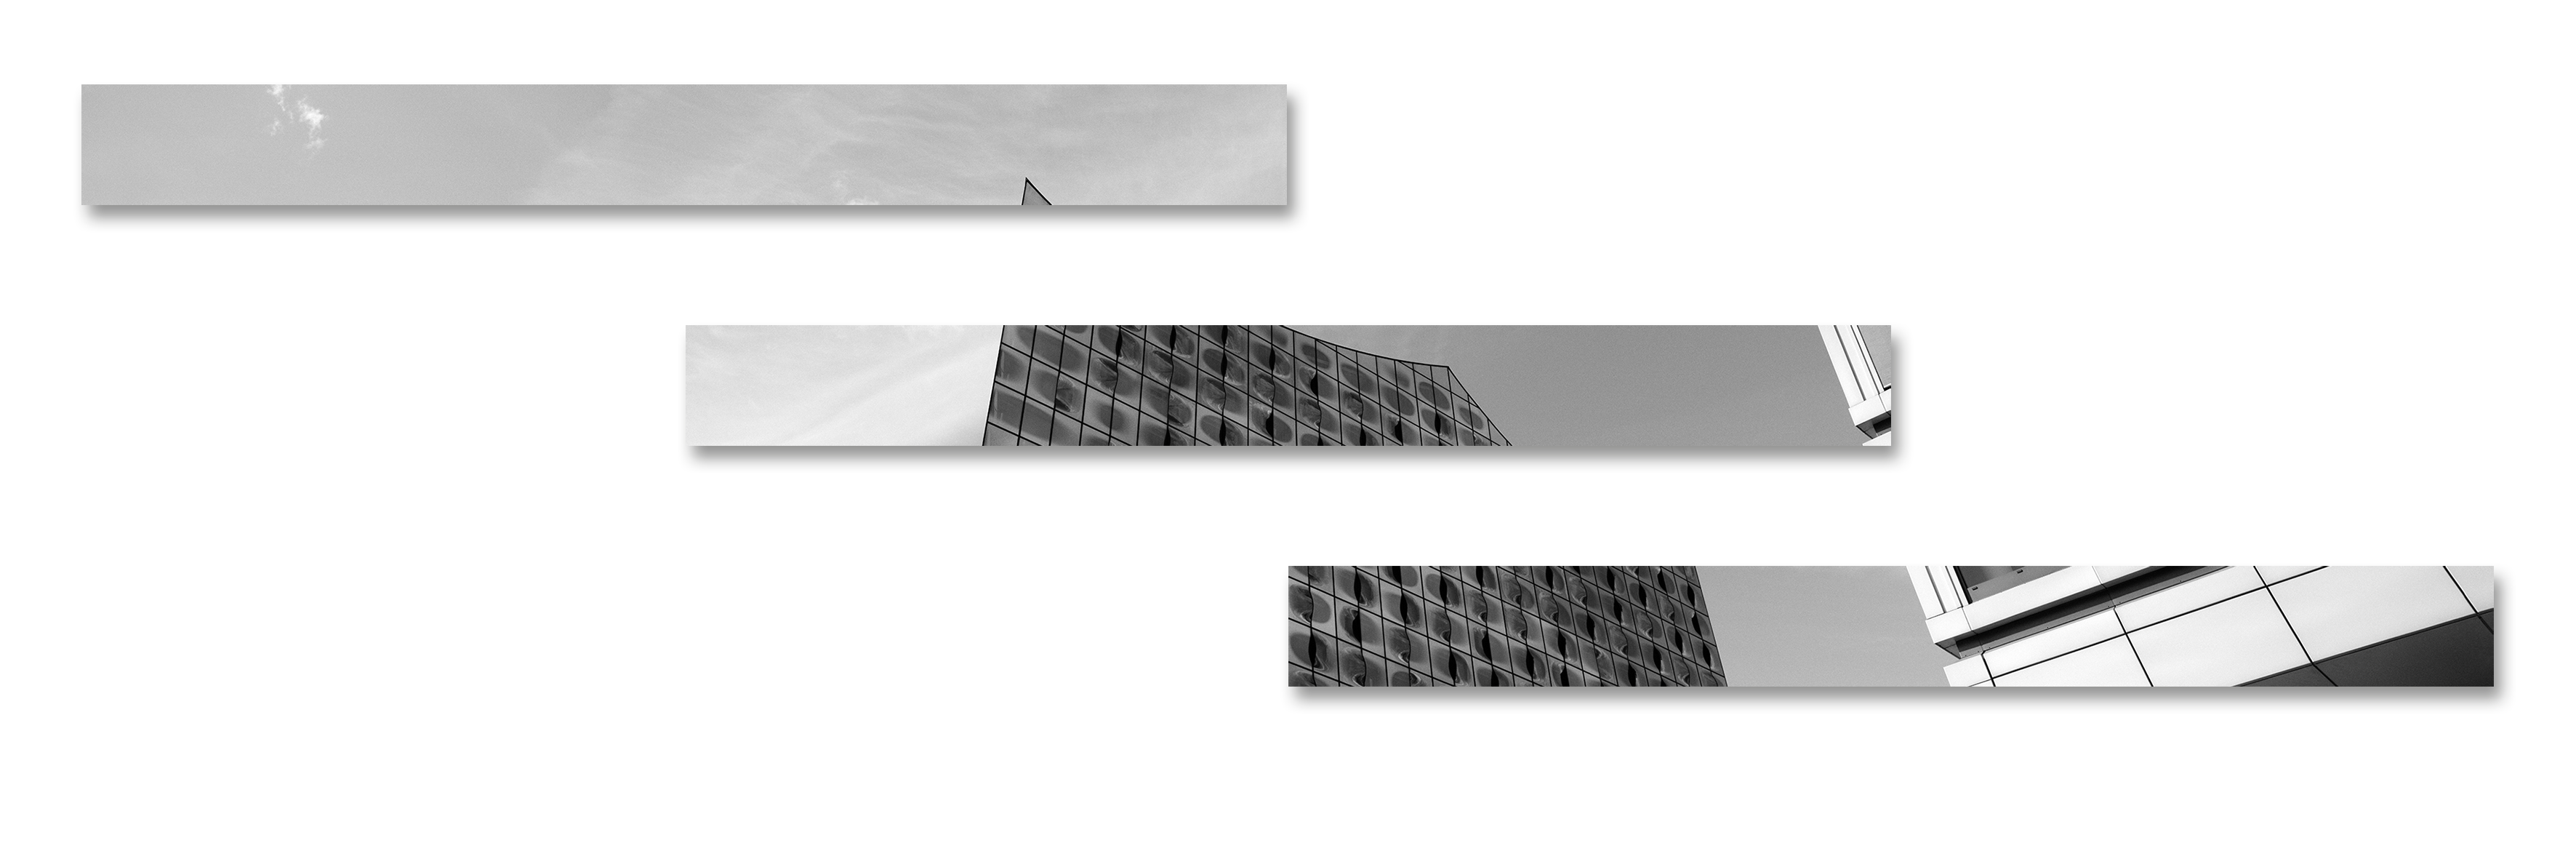 Thorsten Kern: "Elbphilharmonie_03", 2016, Analoge Fotografie, s/w, 3 Teile à 10 x 100 cm, Diasec, Auflage: 3